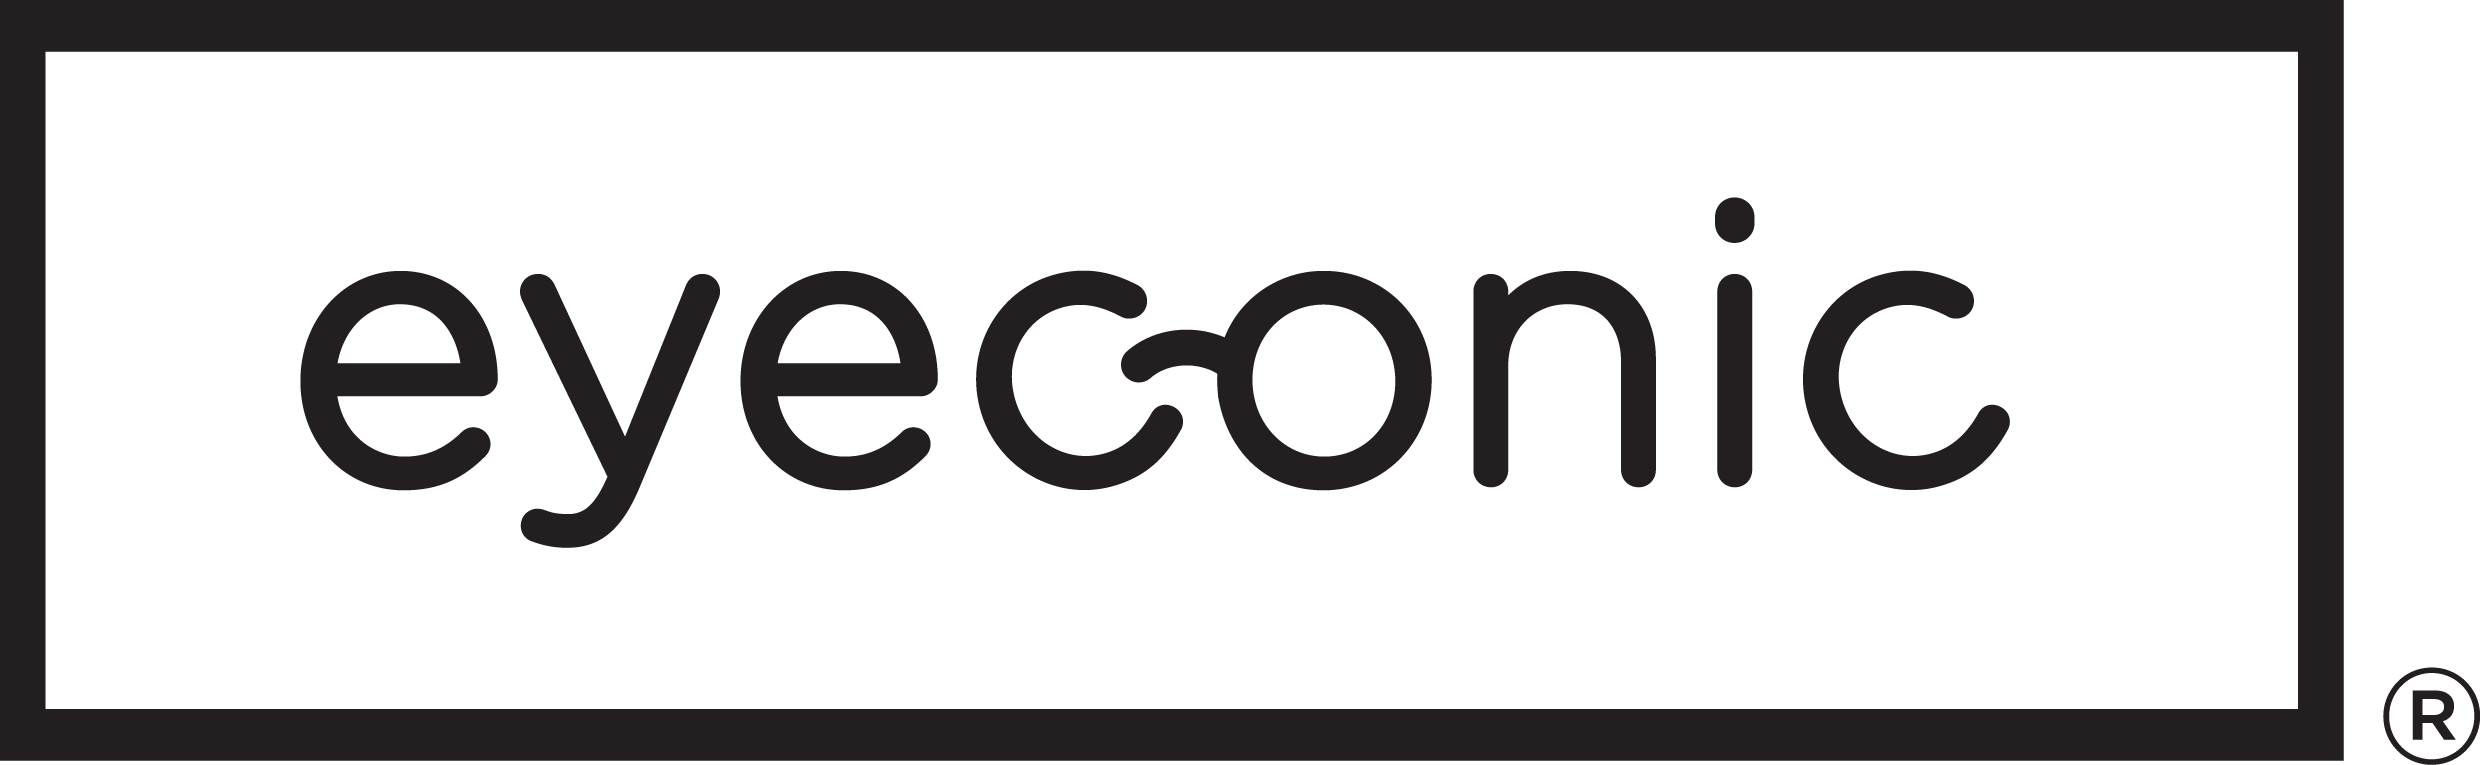 Eyeconic Logo